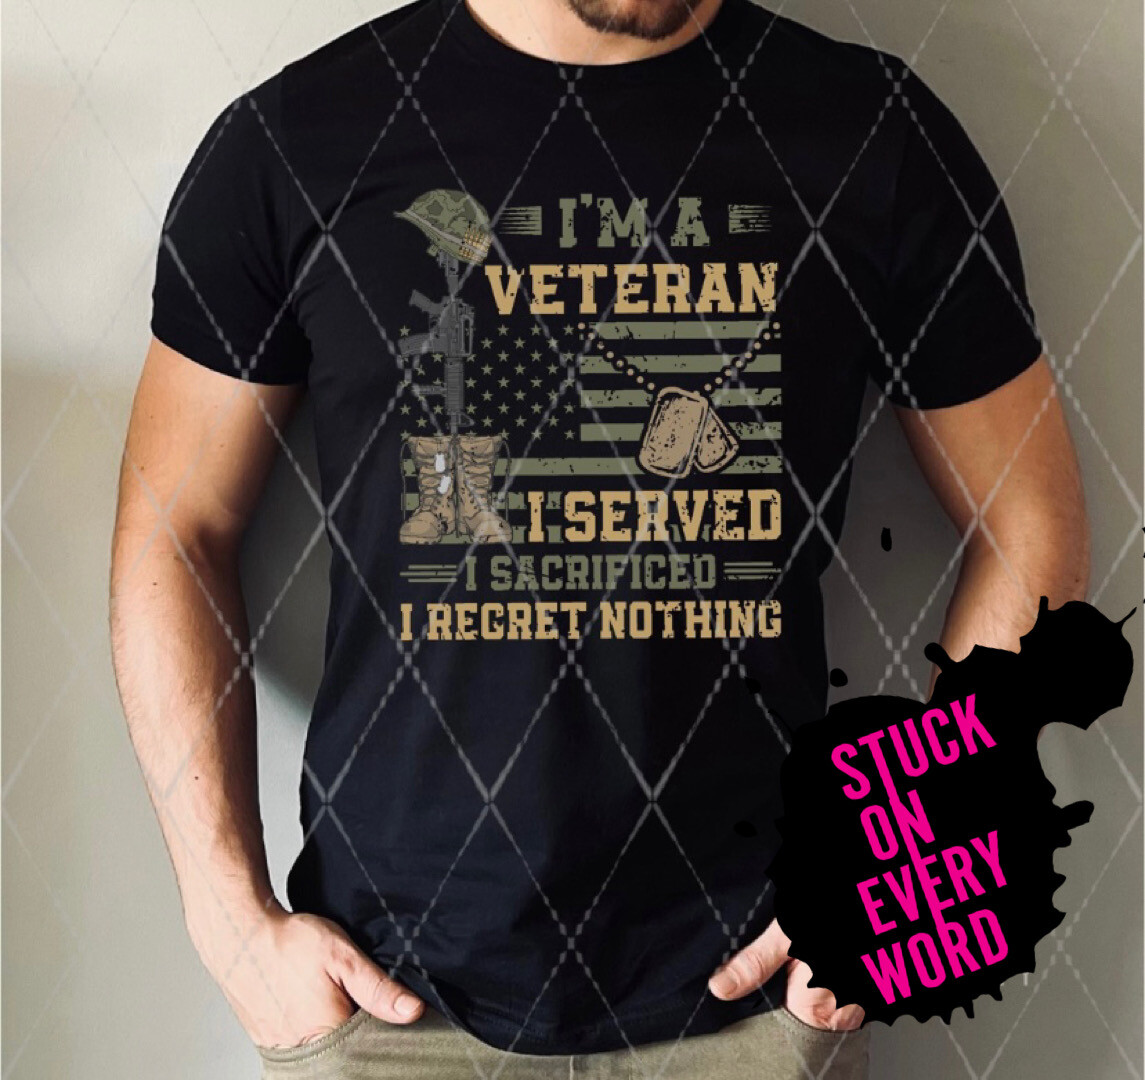 I Am A Veteran, I Regret Nothing